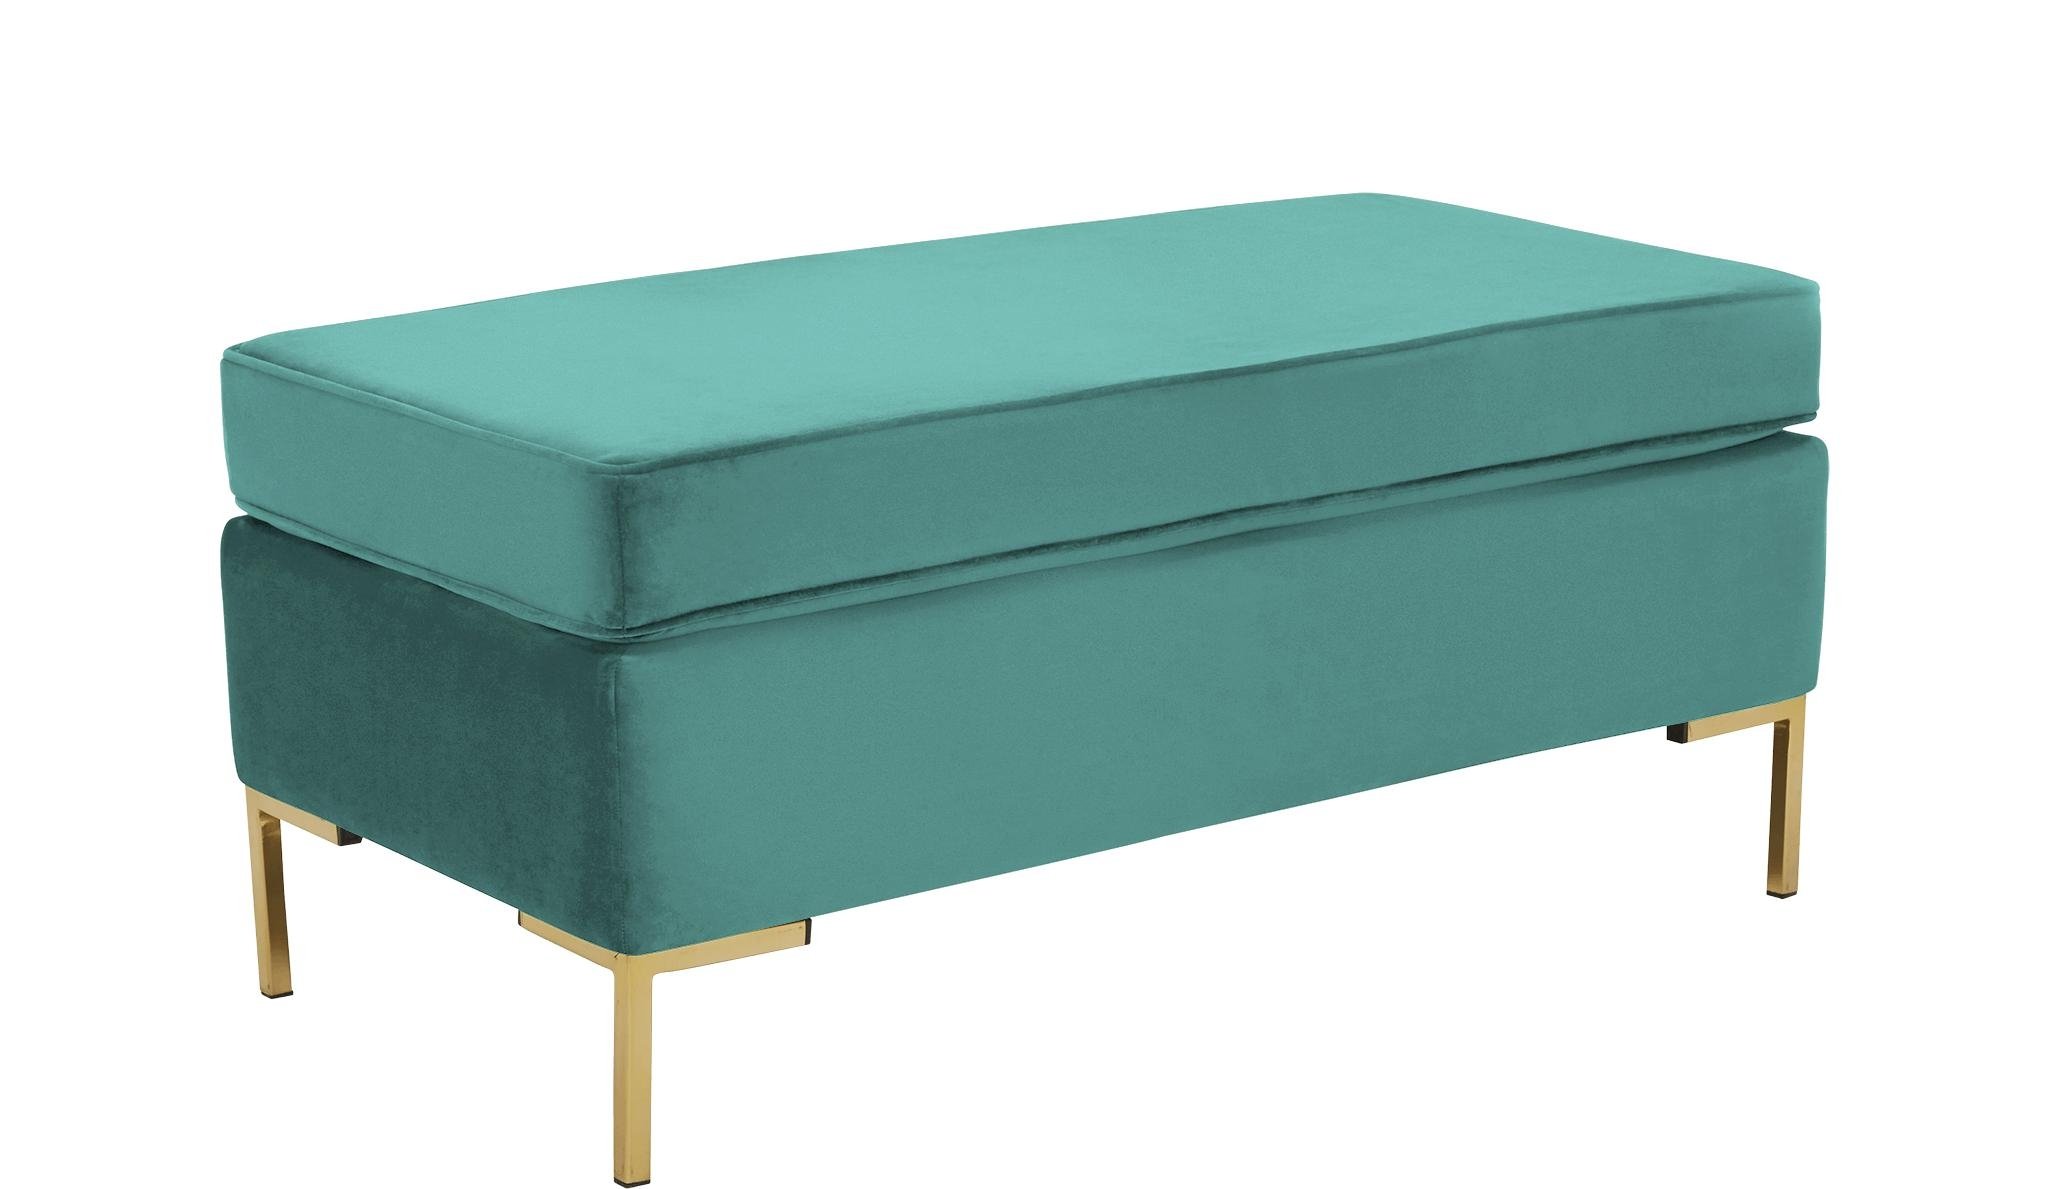 Green Dee Mid Century Modern Bench with Storage - Essence Aqua - Image 1